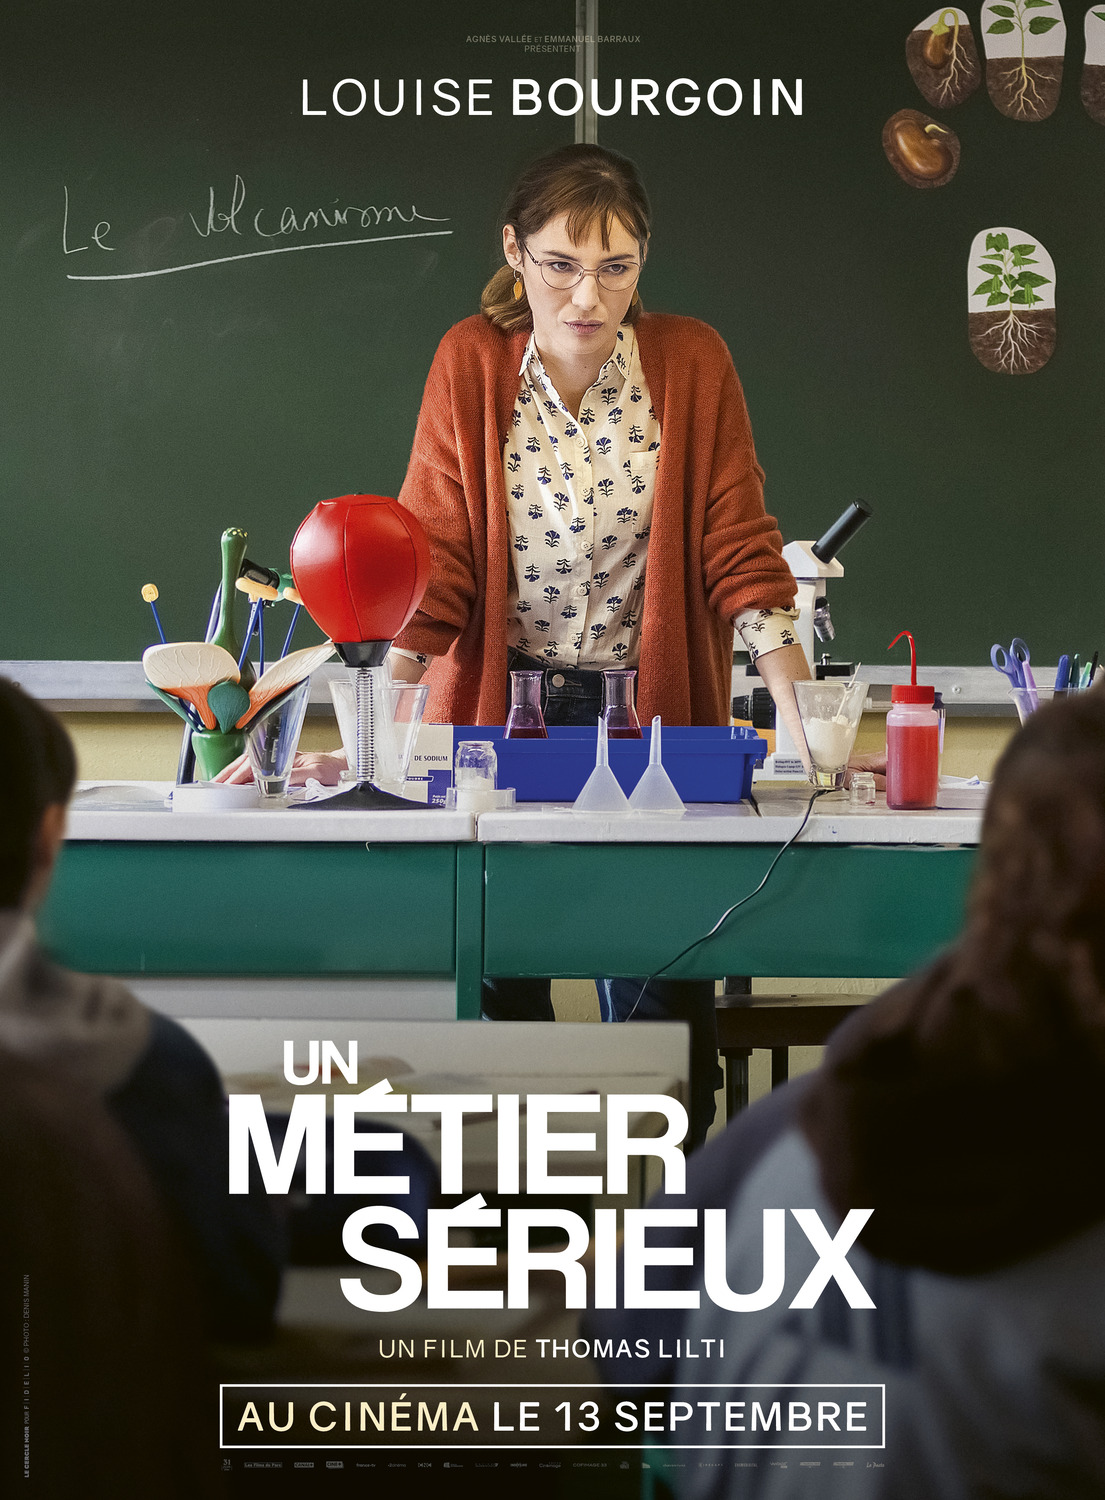 Extra Large Movie Poster Image for Un métier sérieux (#2 of 7)